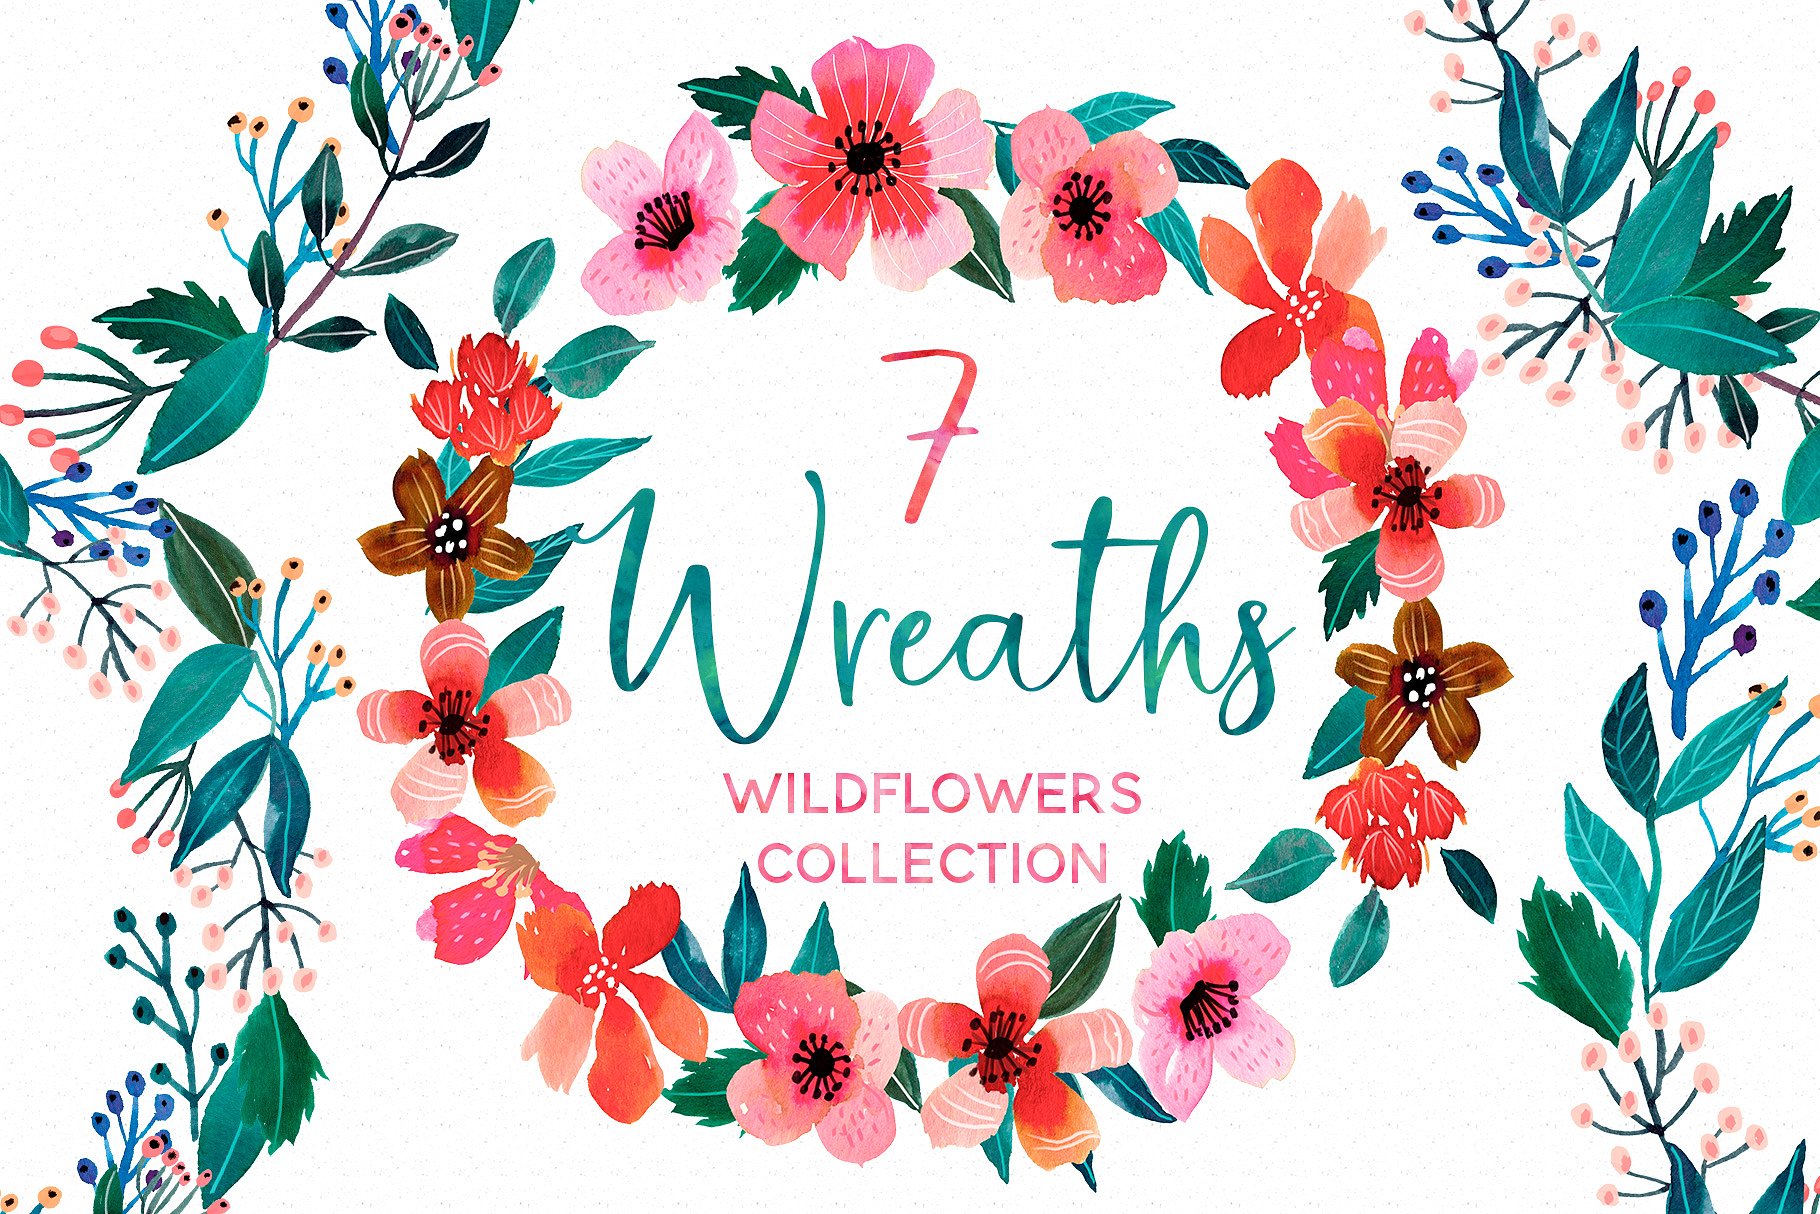 艳丽野花水彩插画集 Wildflowers Watercolor Collection插图(4)